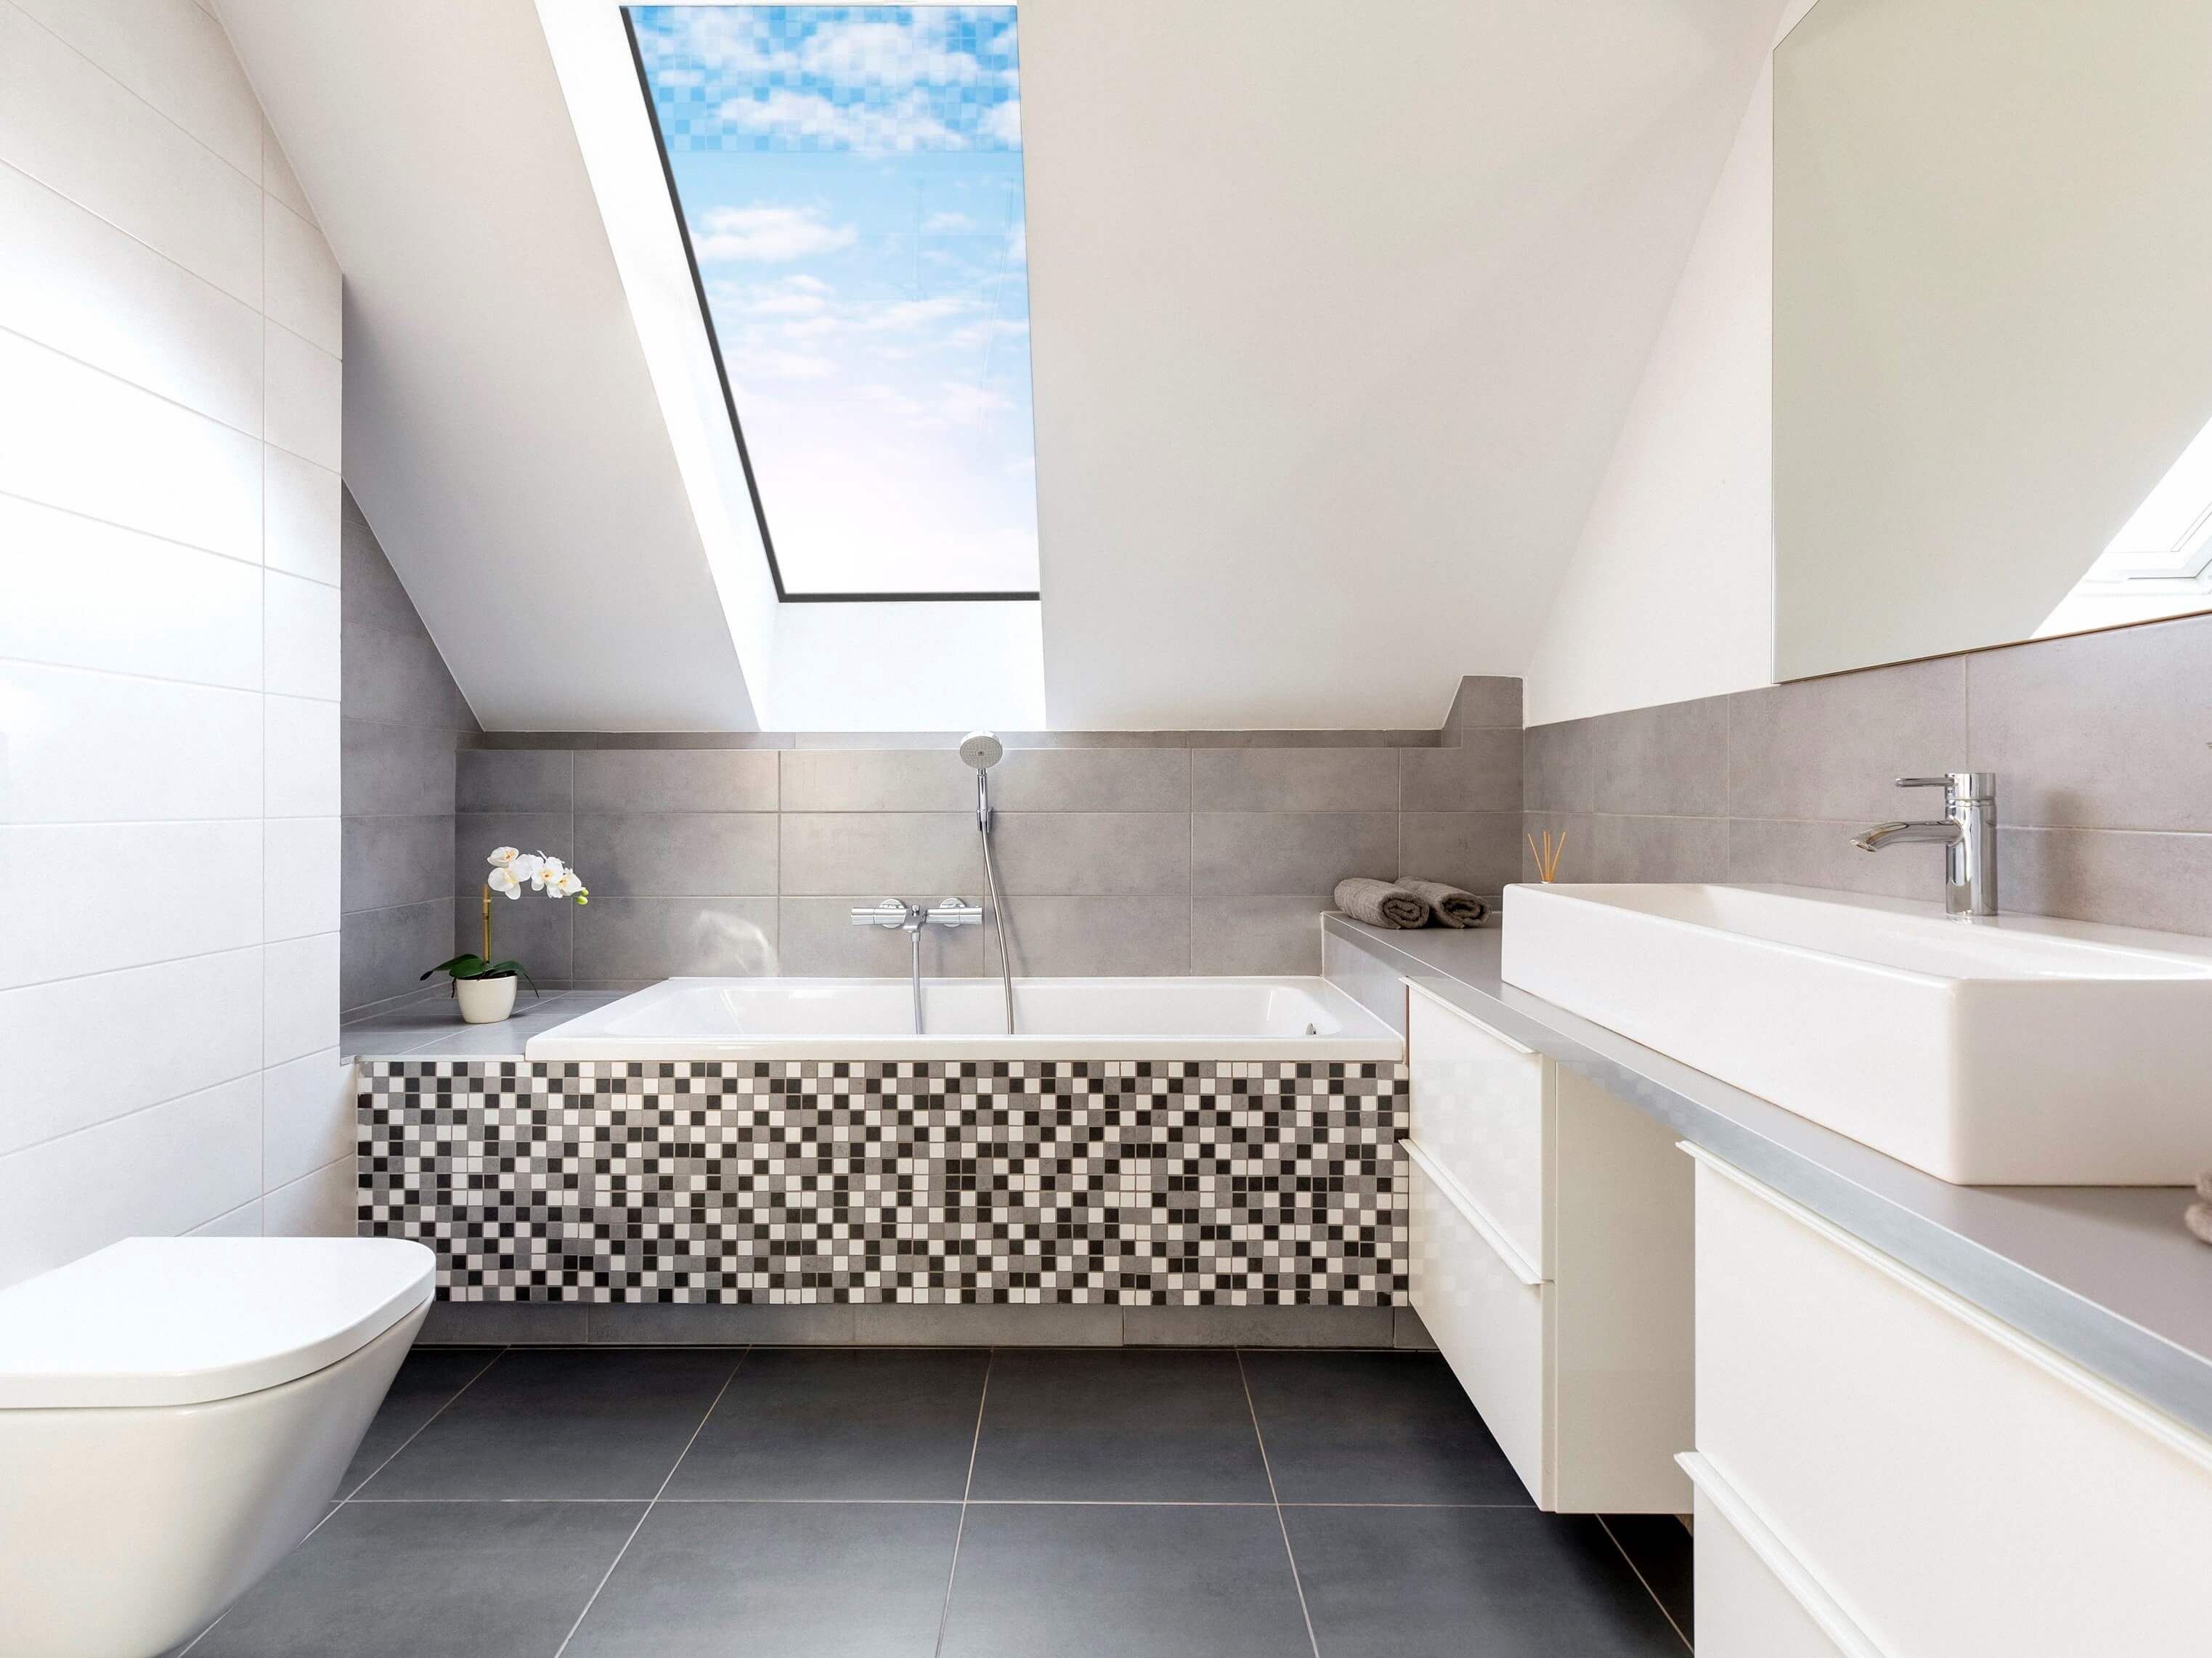 Luxlite installed in a contemporary bathroom